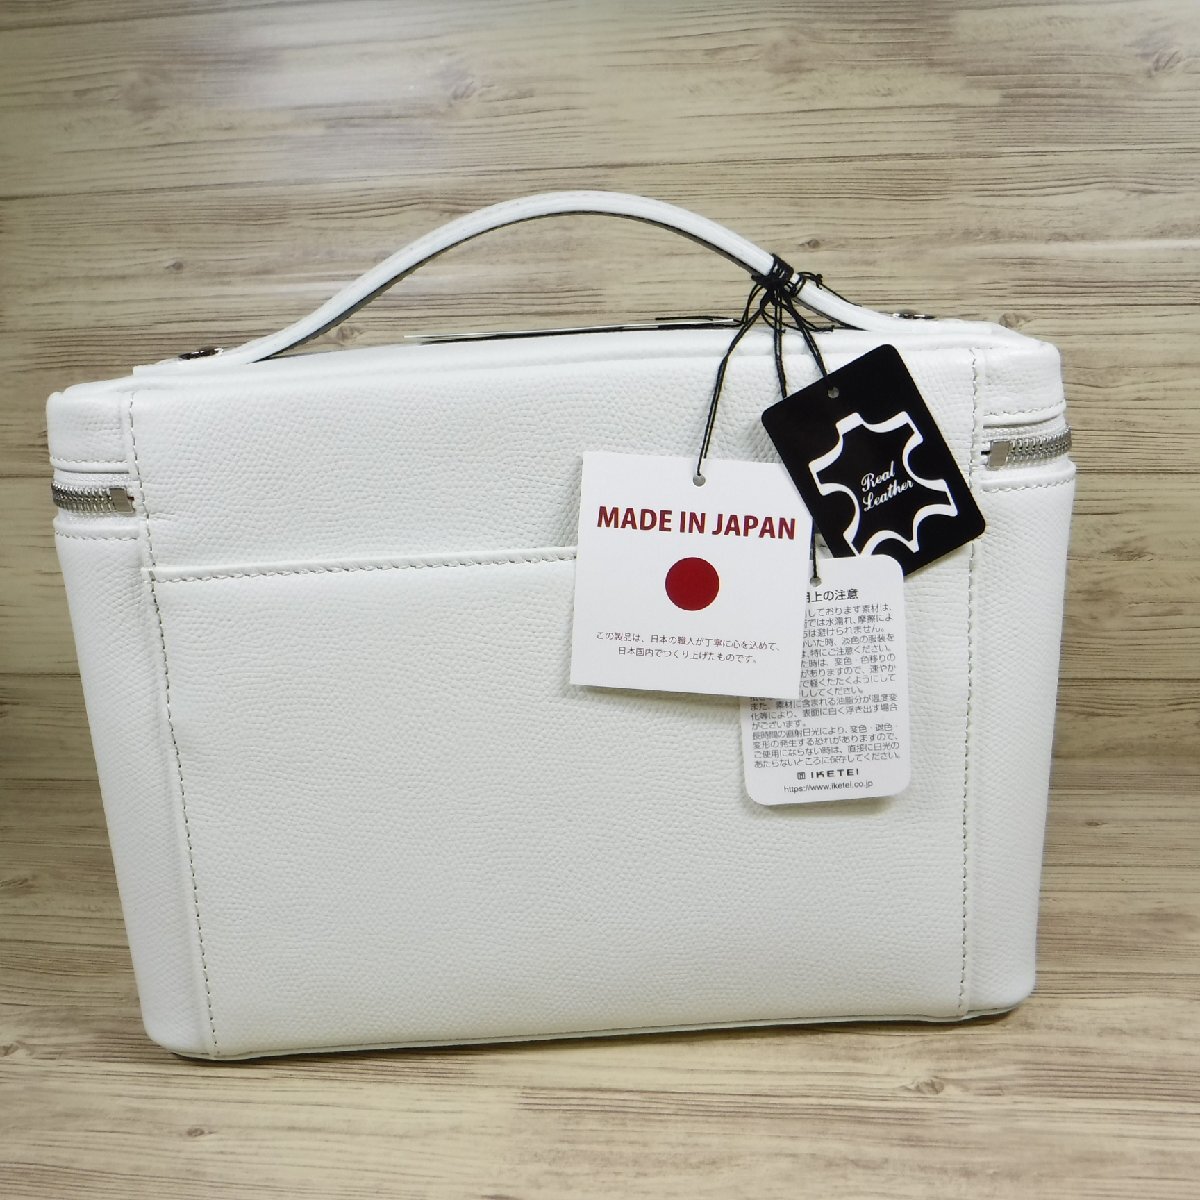 YY645 Castelbajac regular price 29700 jpy new goods white leather vanity bag cow leather second bag made in Japan 032213ka Rene white CASTELBAJAC